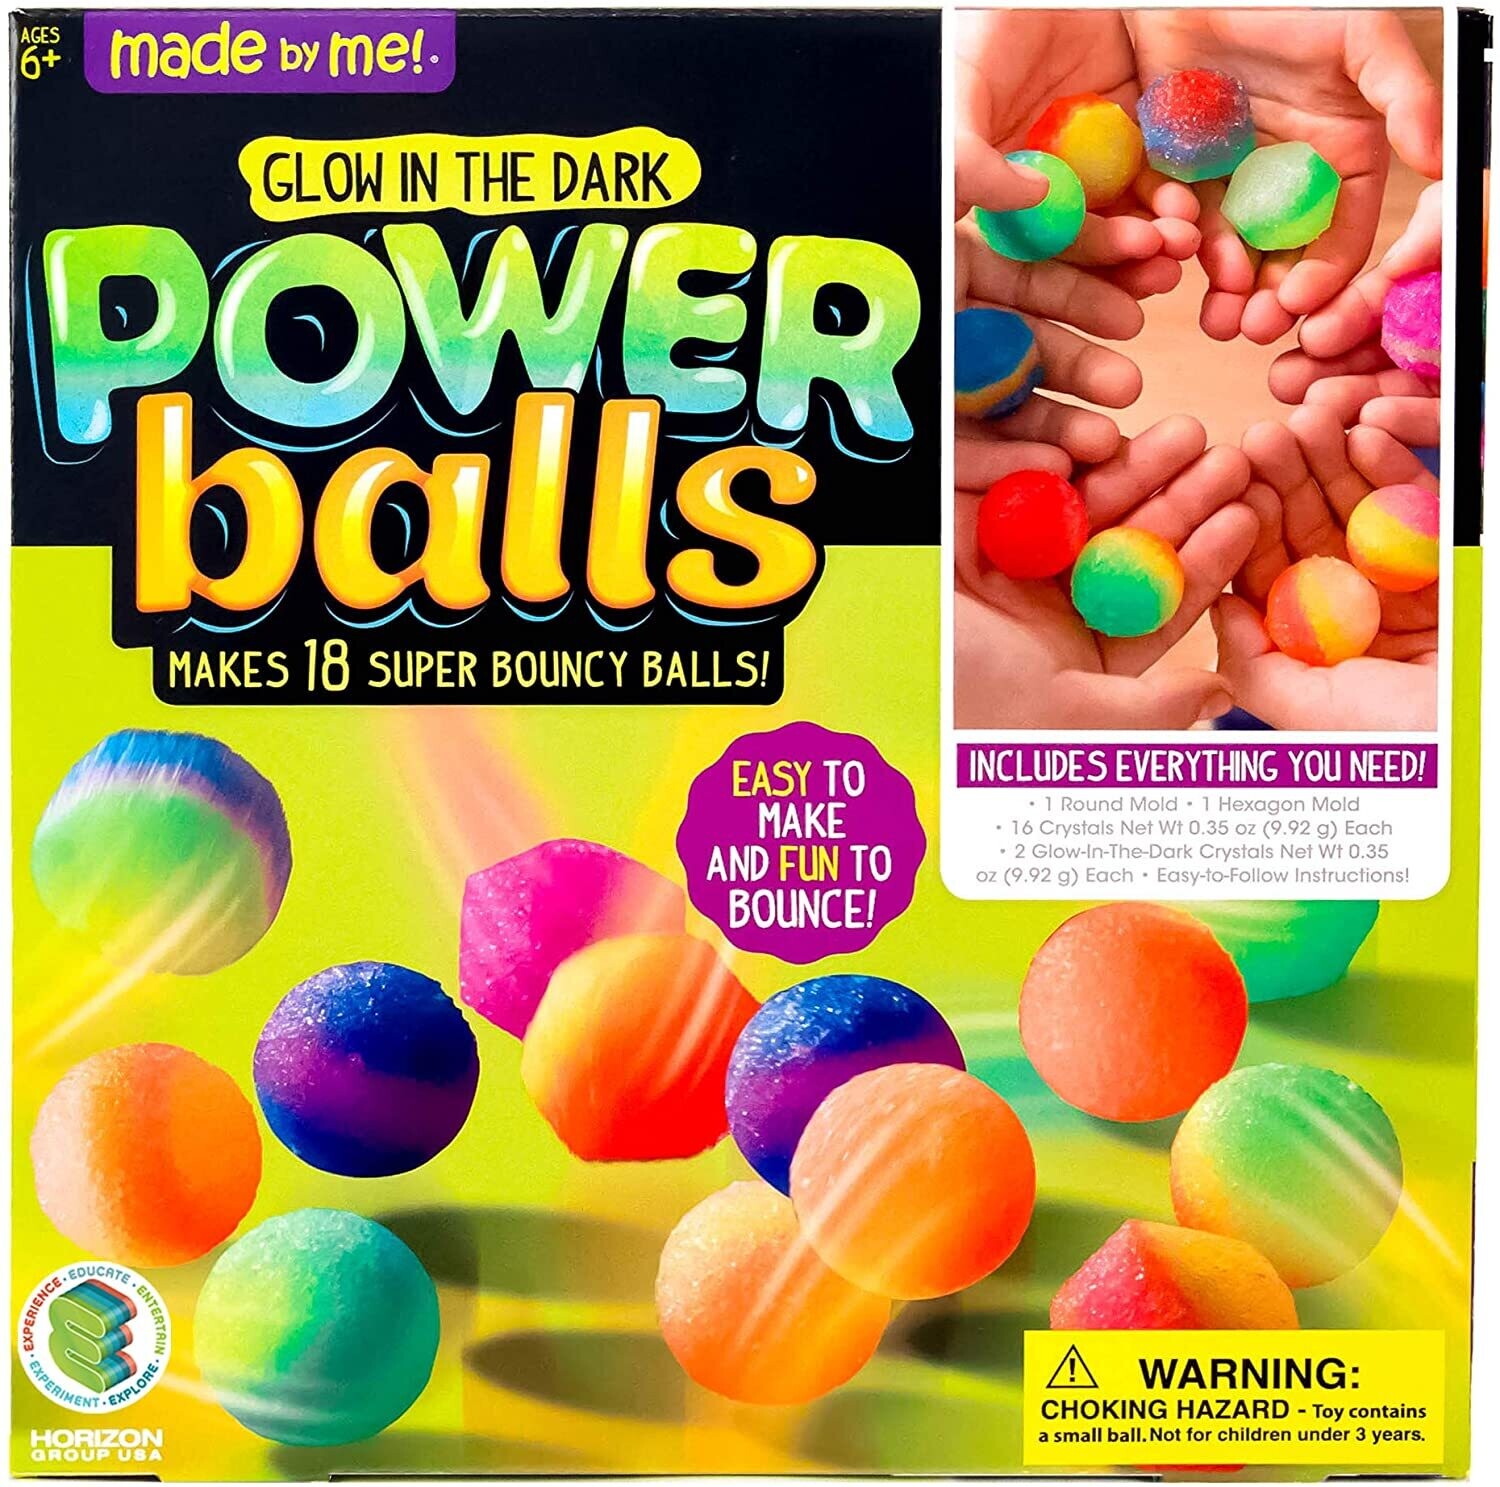 Power Balls